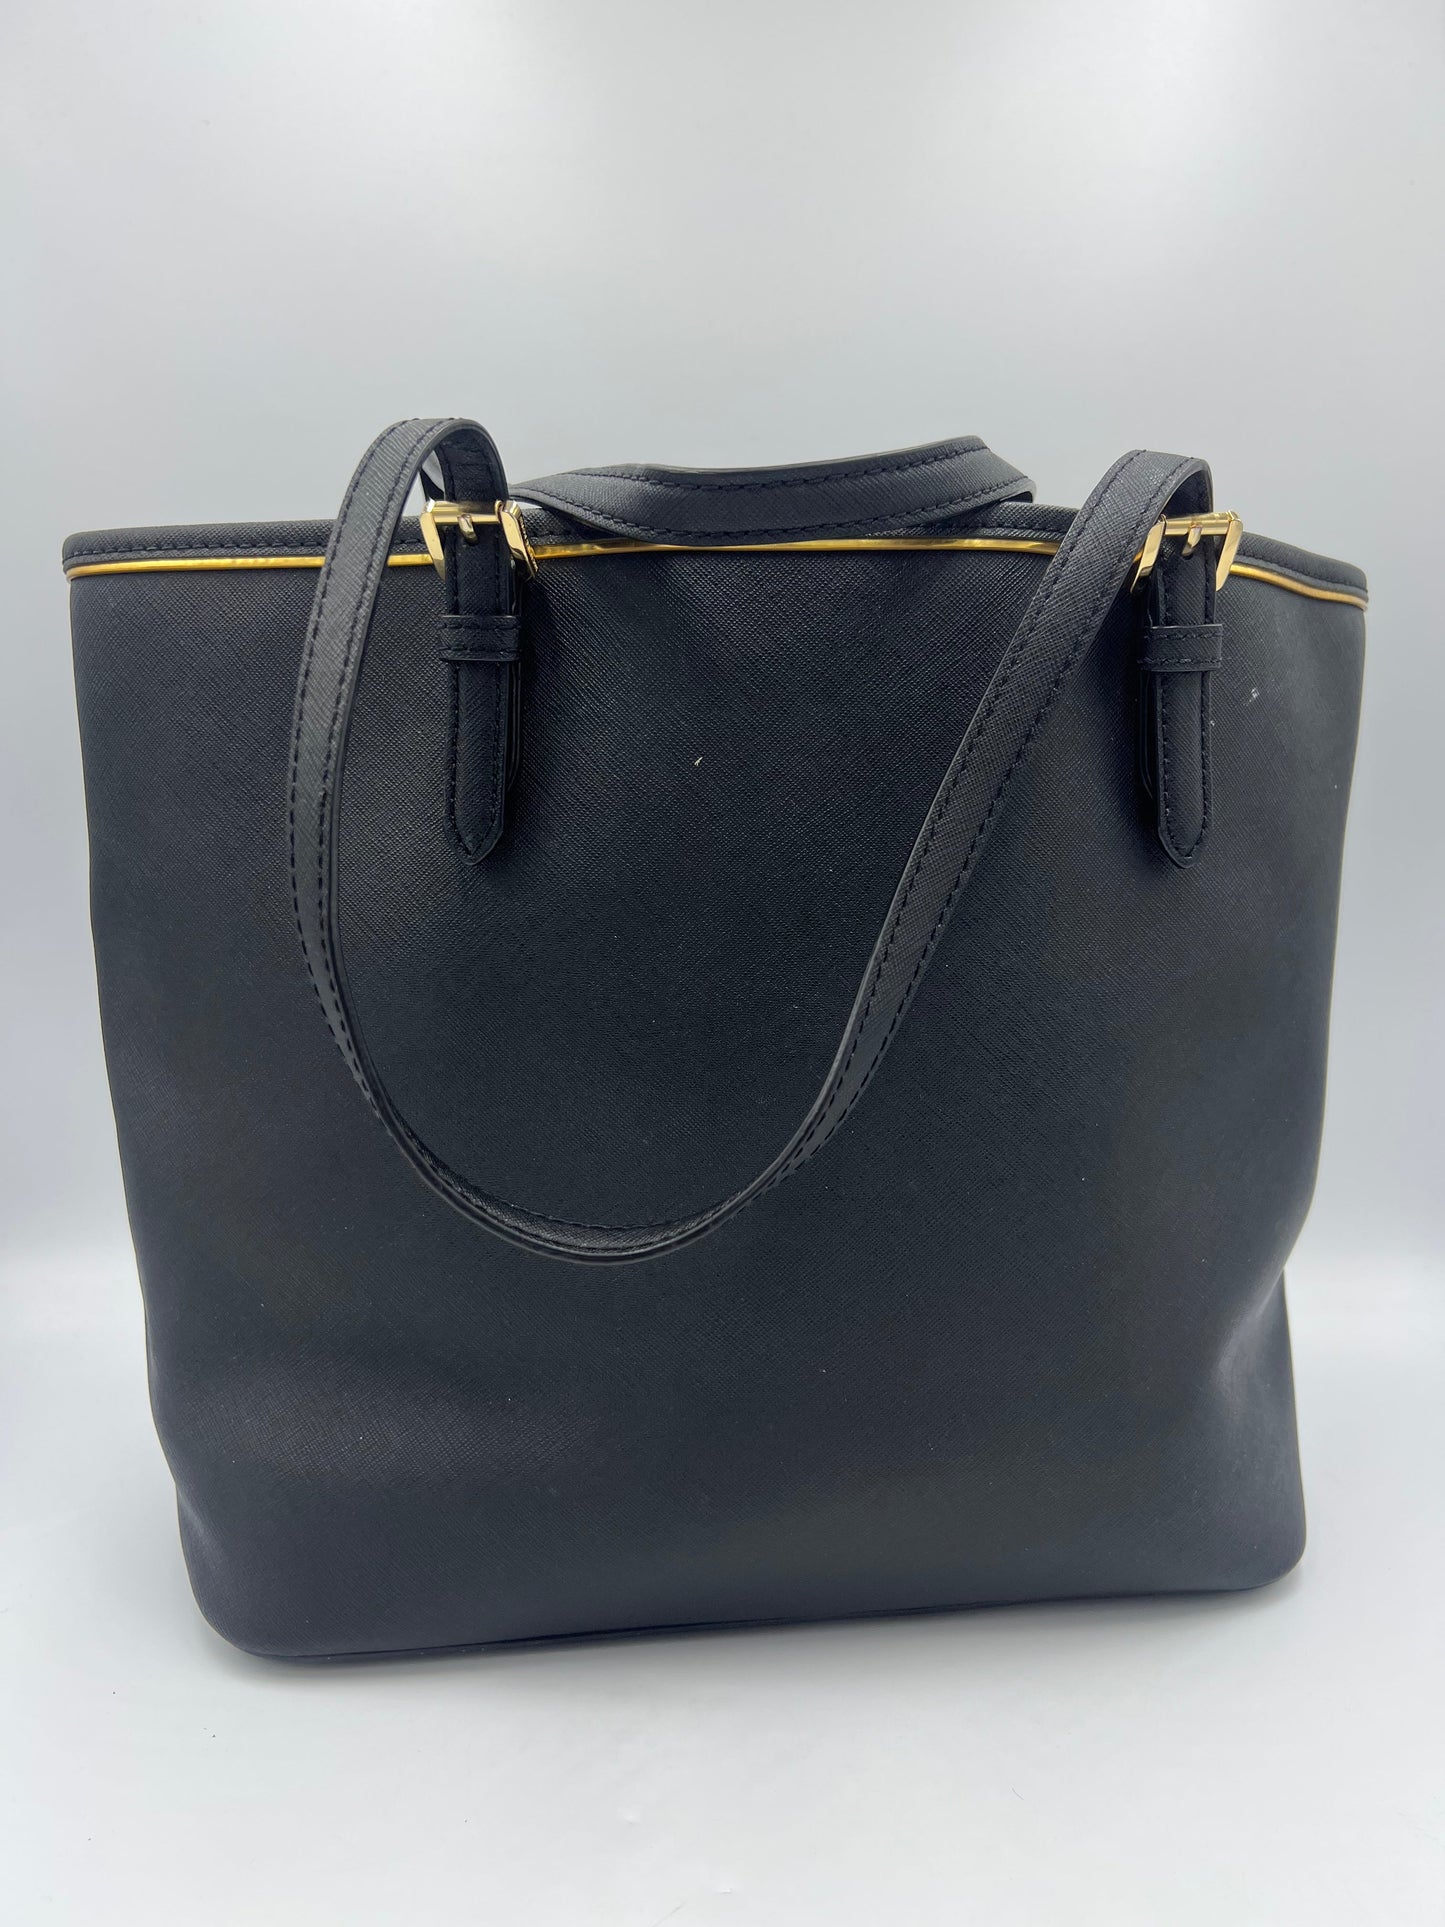 Handbag Designer Michael Kors